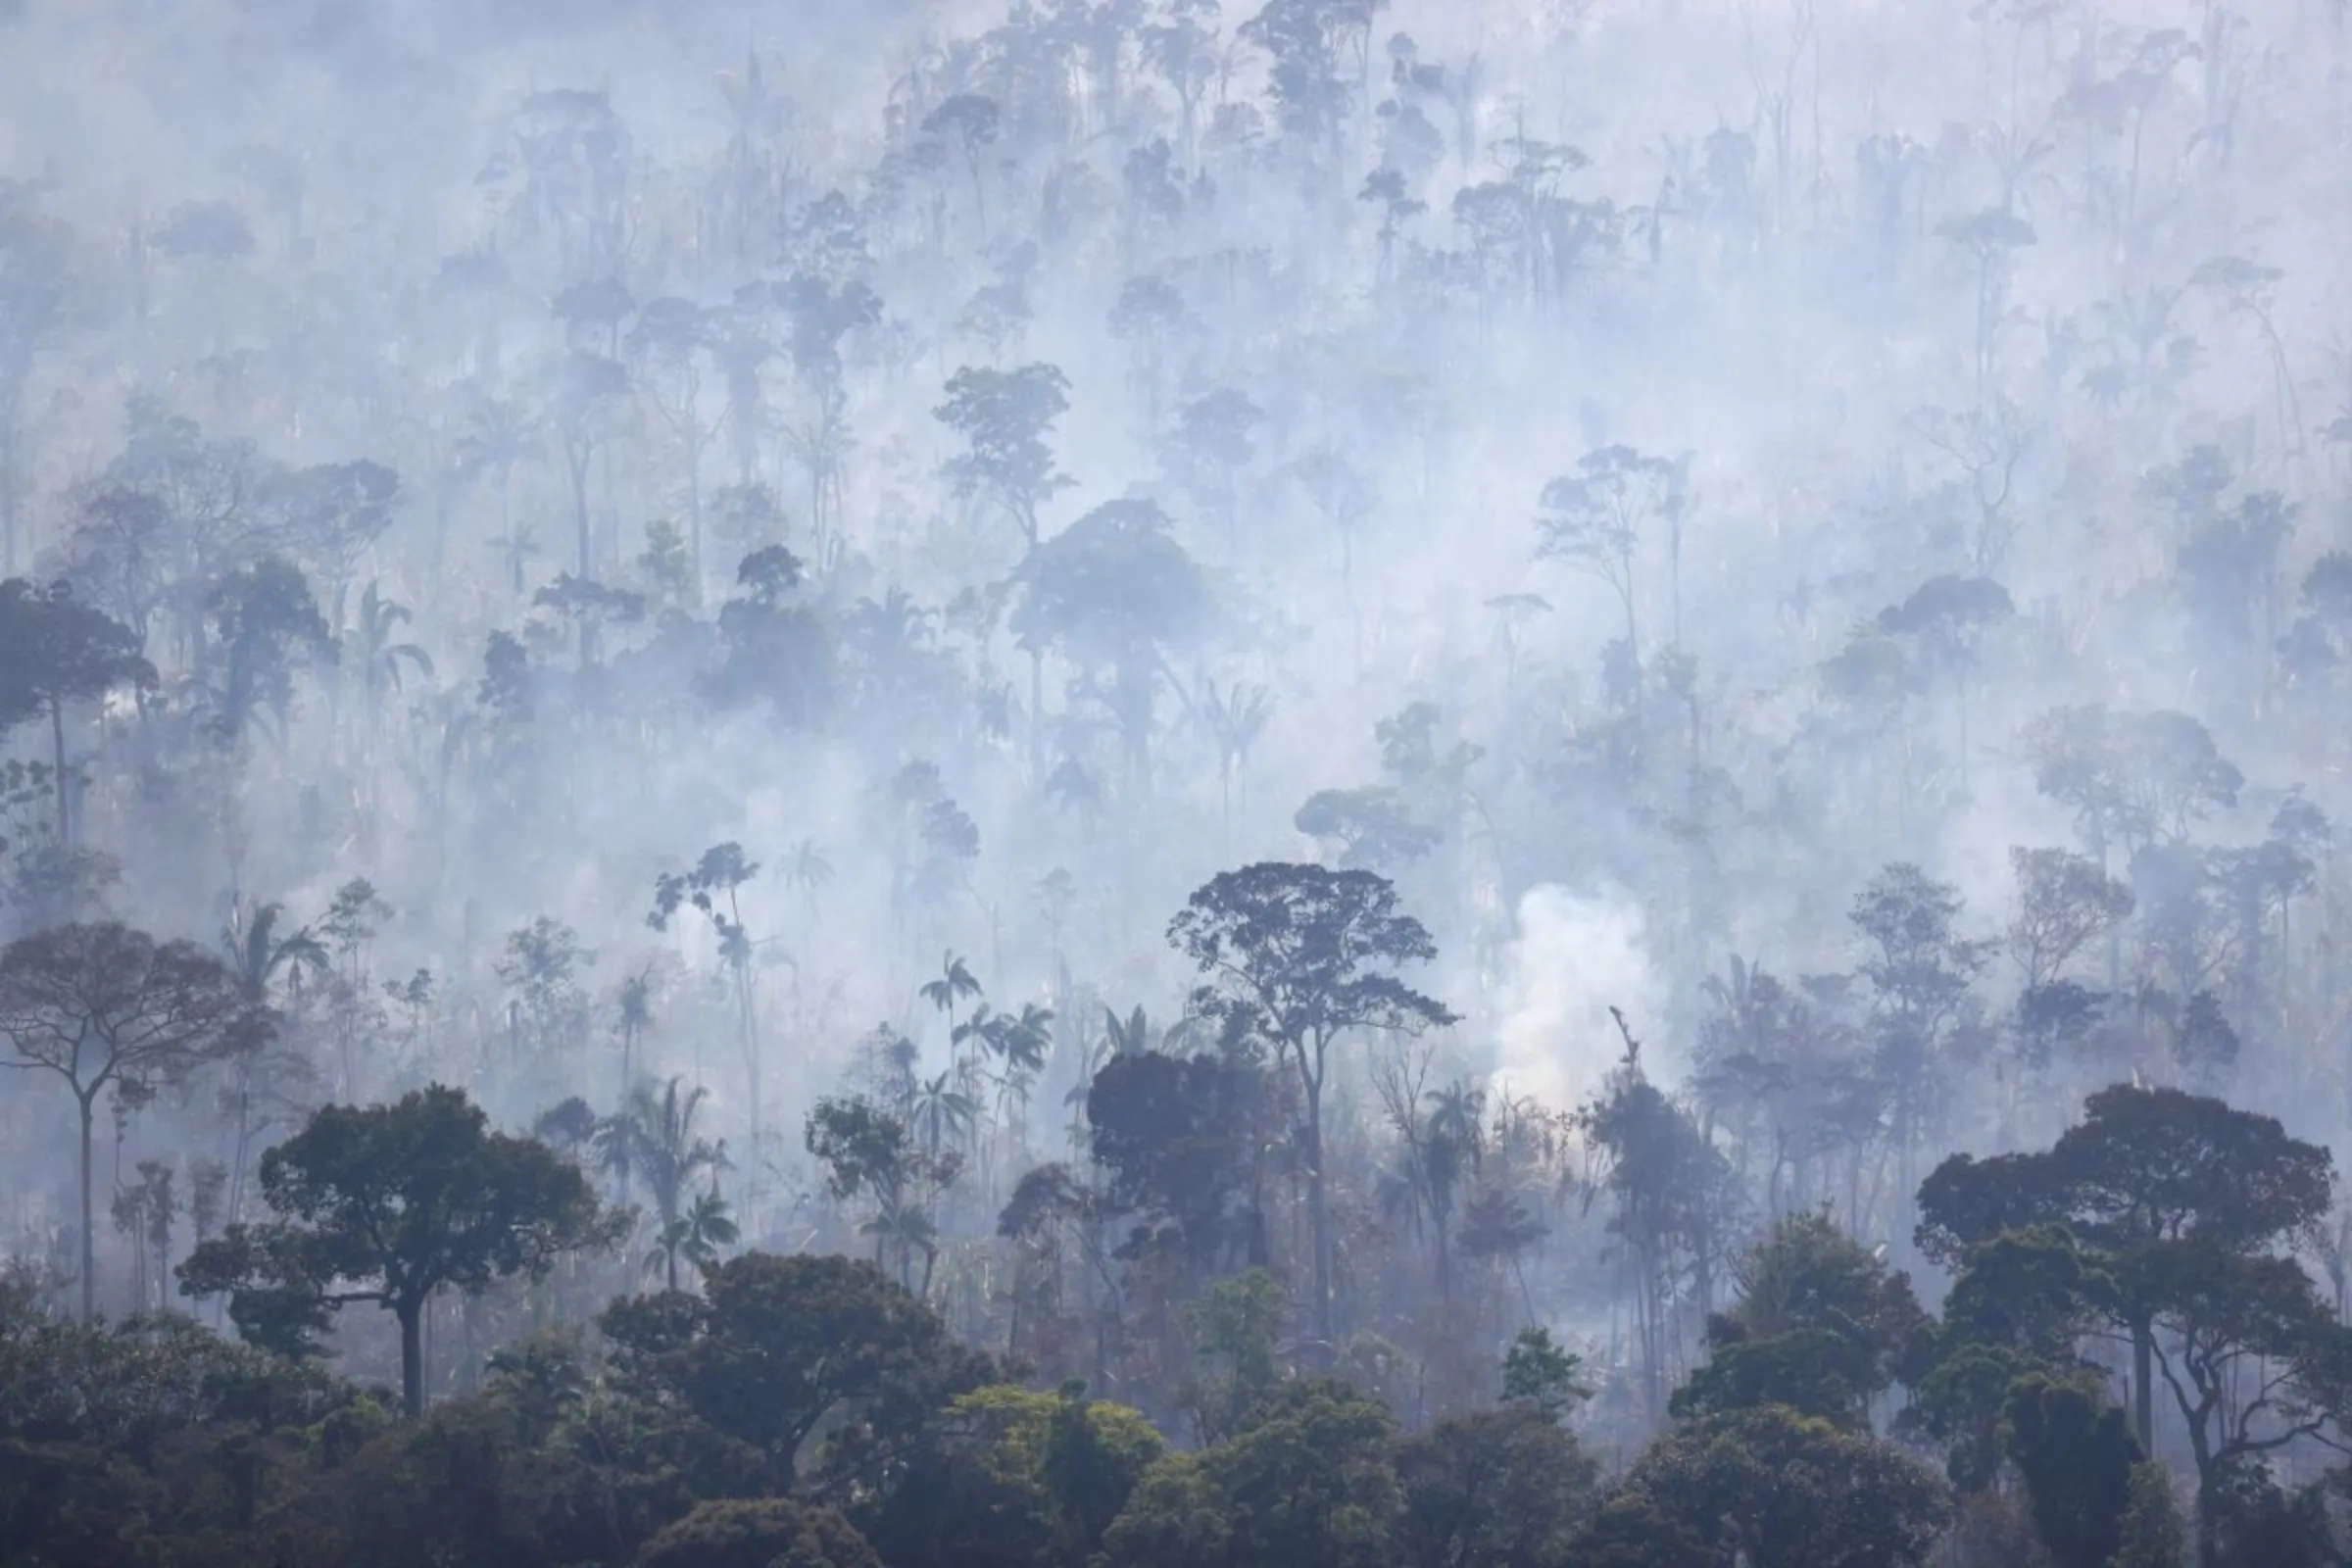 Smoke from a fire rises into the air as trees burn amongst vegetation in Brazil's Amazon rainforest near Humaita, Amazonas state, Brazil, August 3, 2023. REUTERS/Leonardo Benassatto